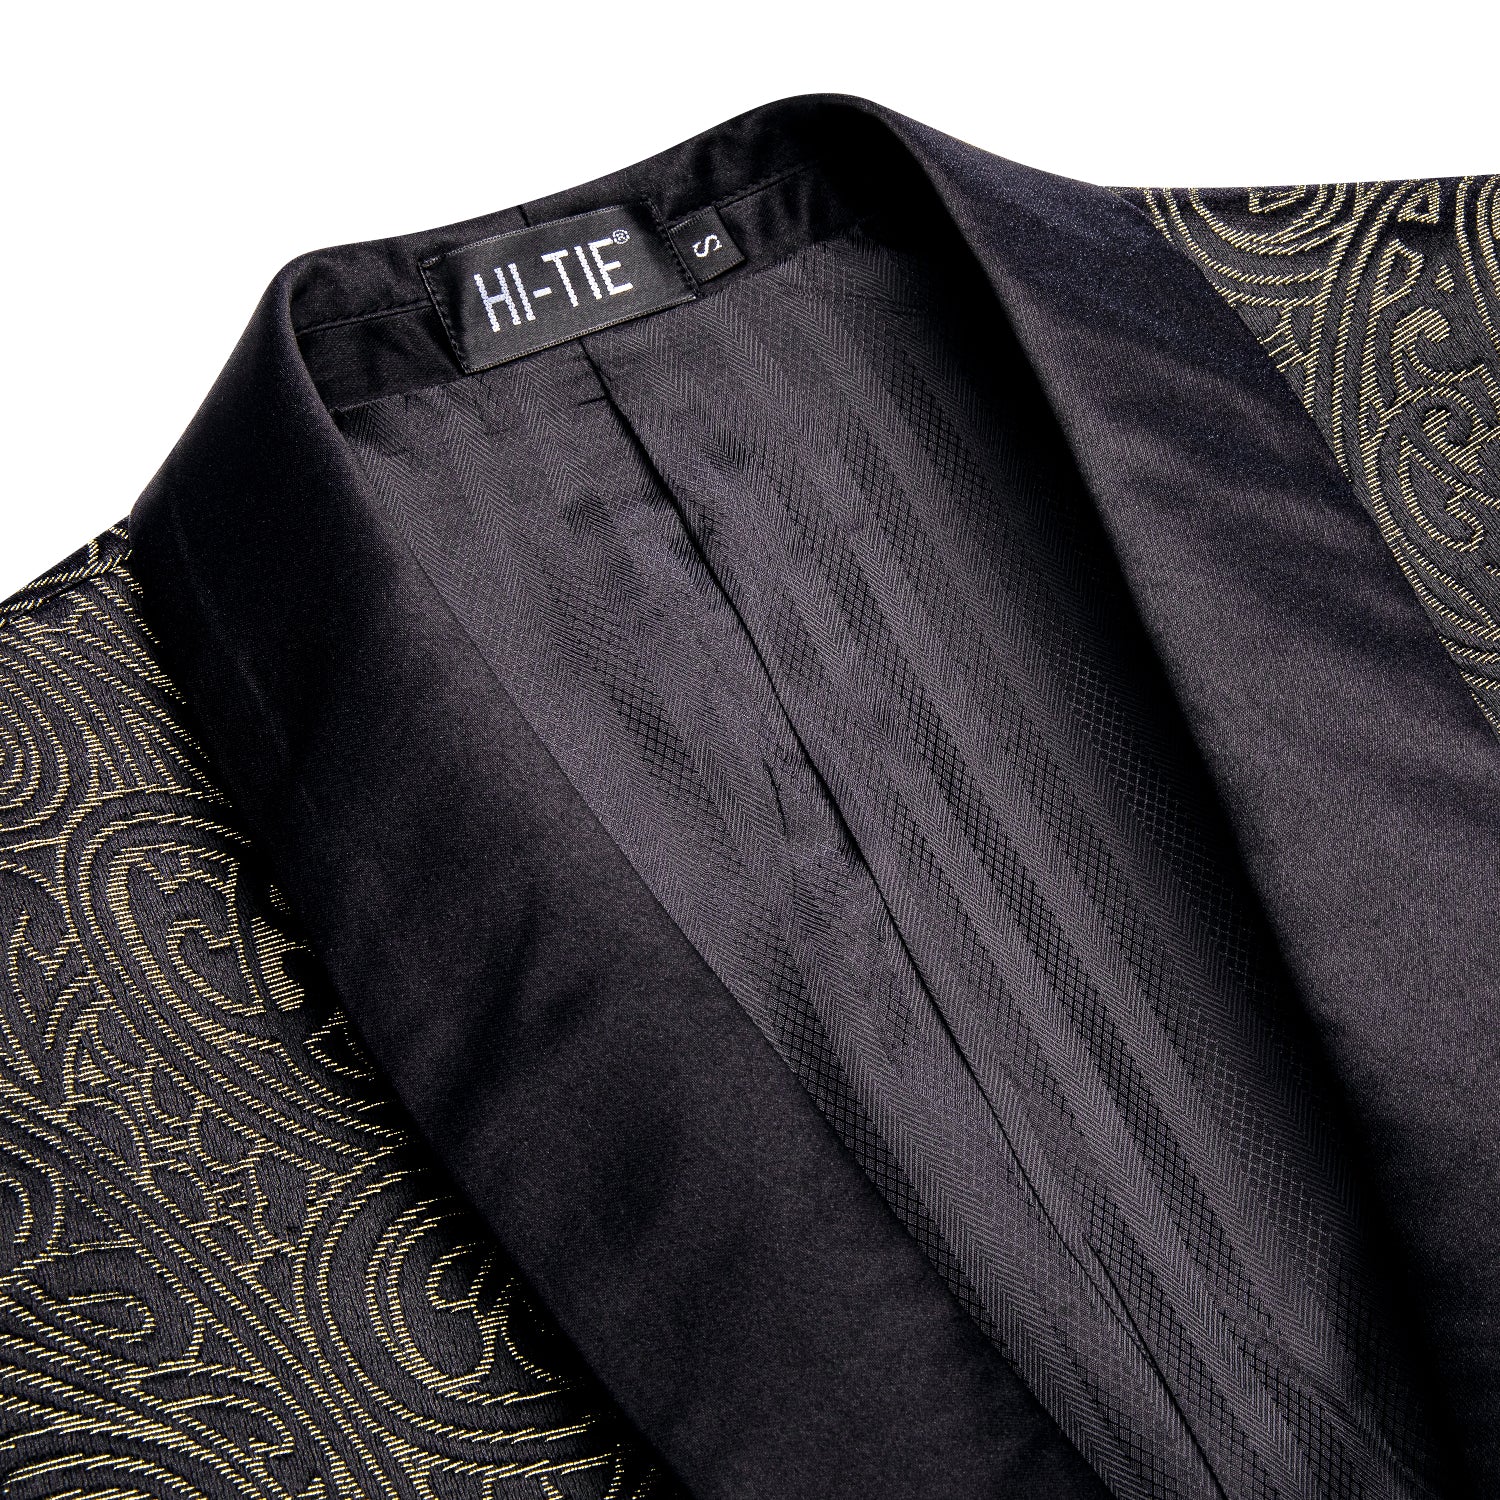 New Luxury Black Champagne Paisley Men's Formal Suit Set